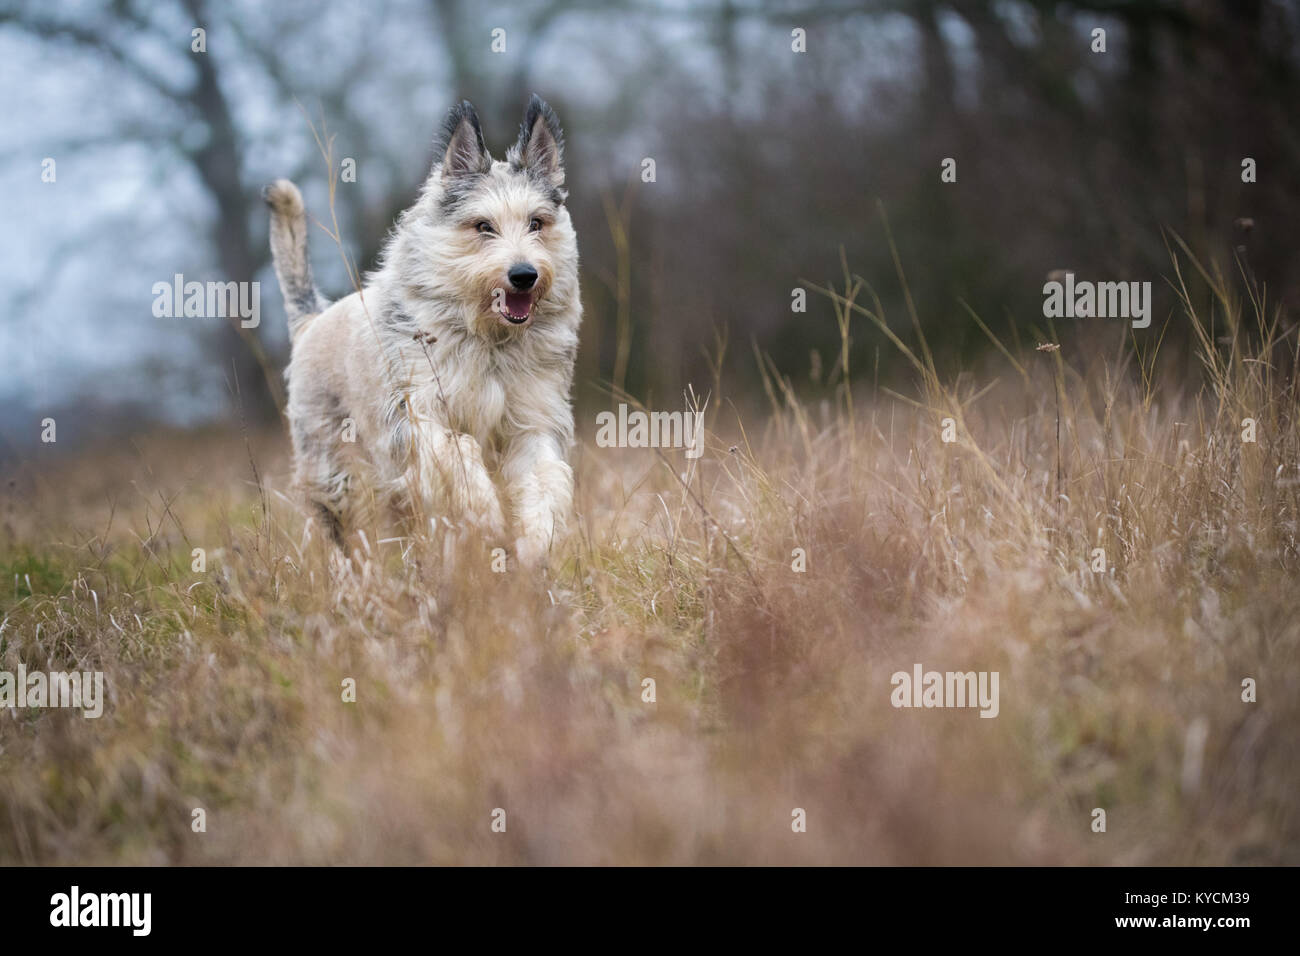 Berger Picard Hund im Winter Feld mit langem Haar Stockfoto